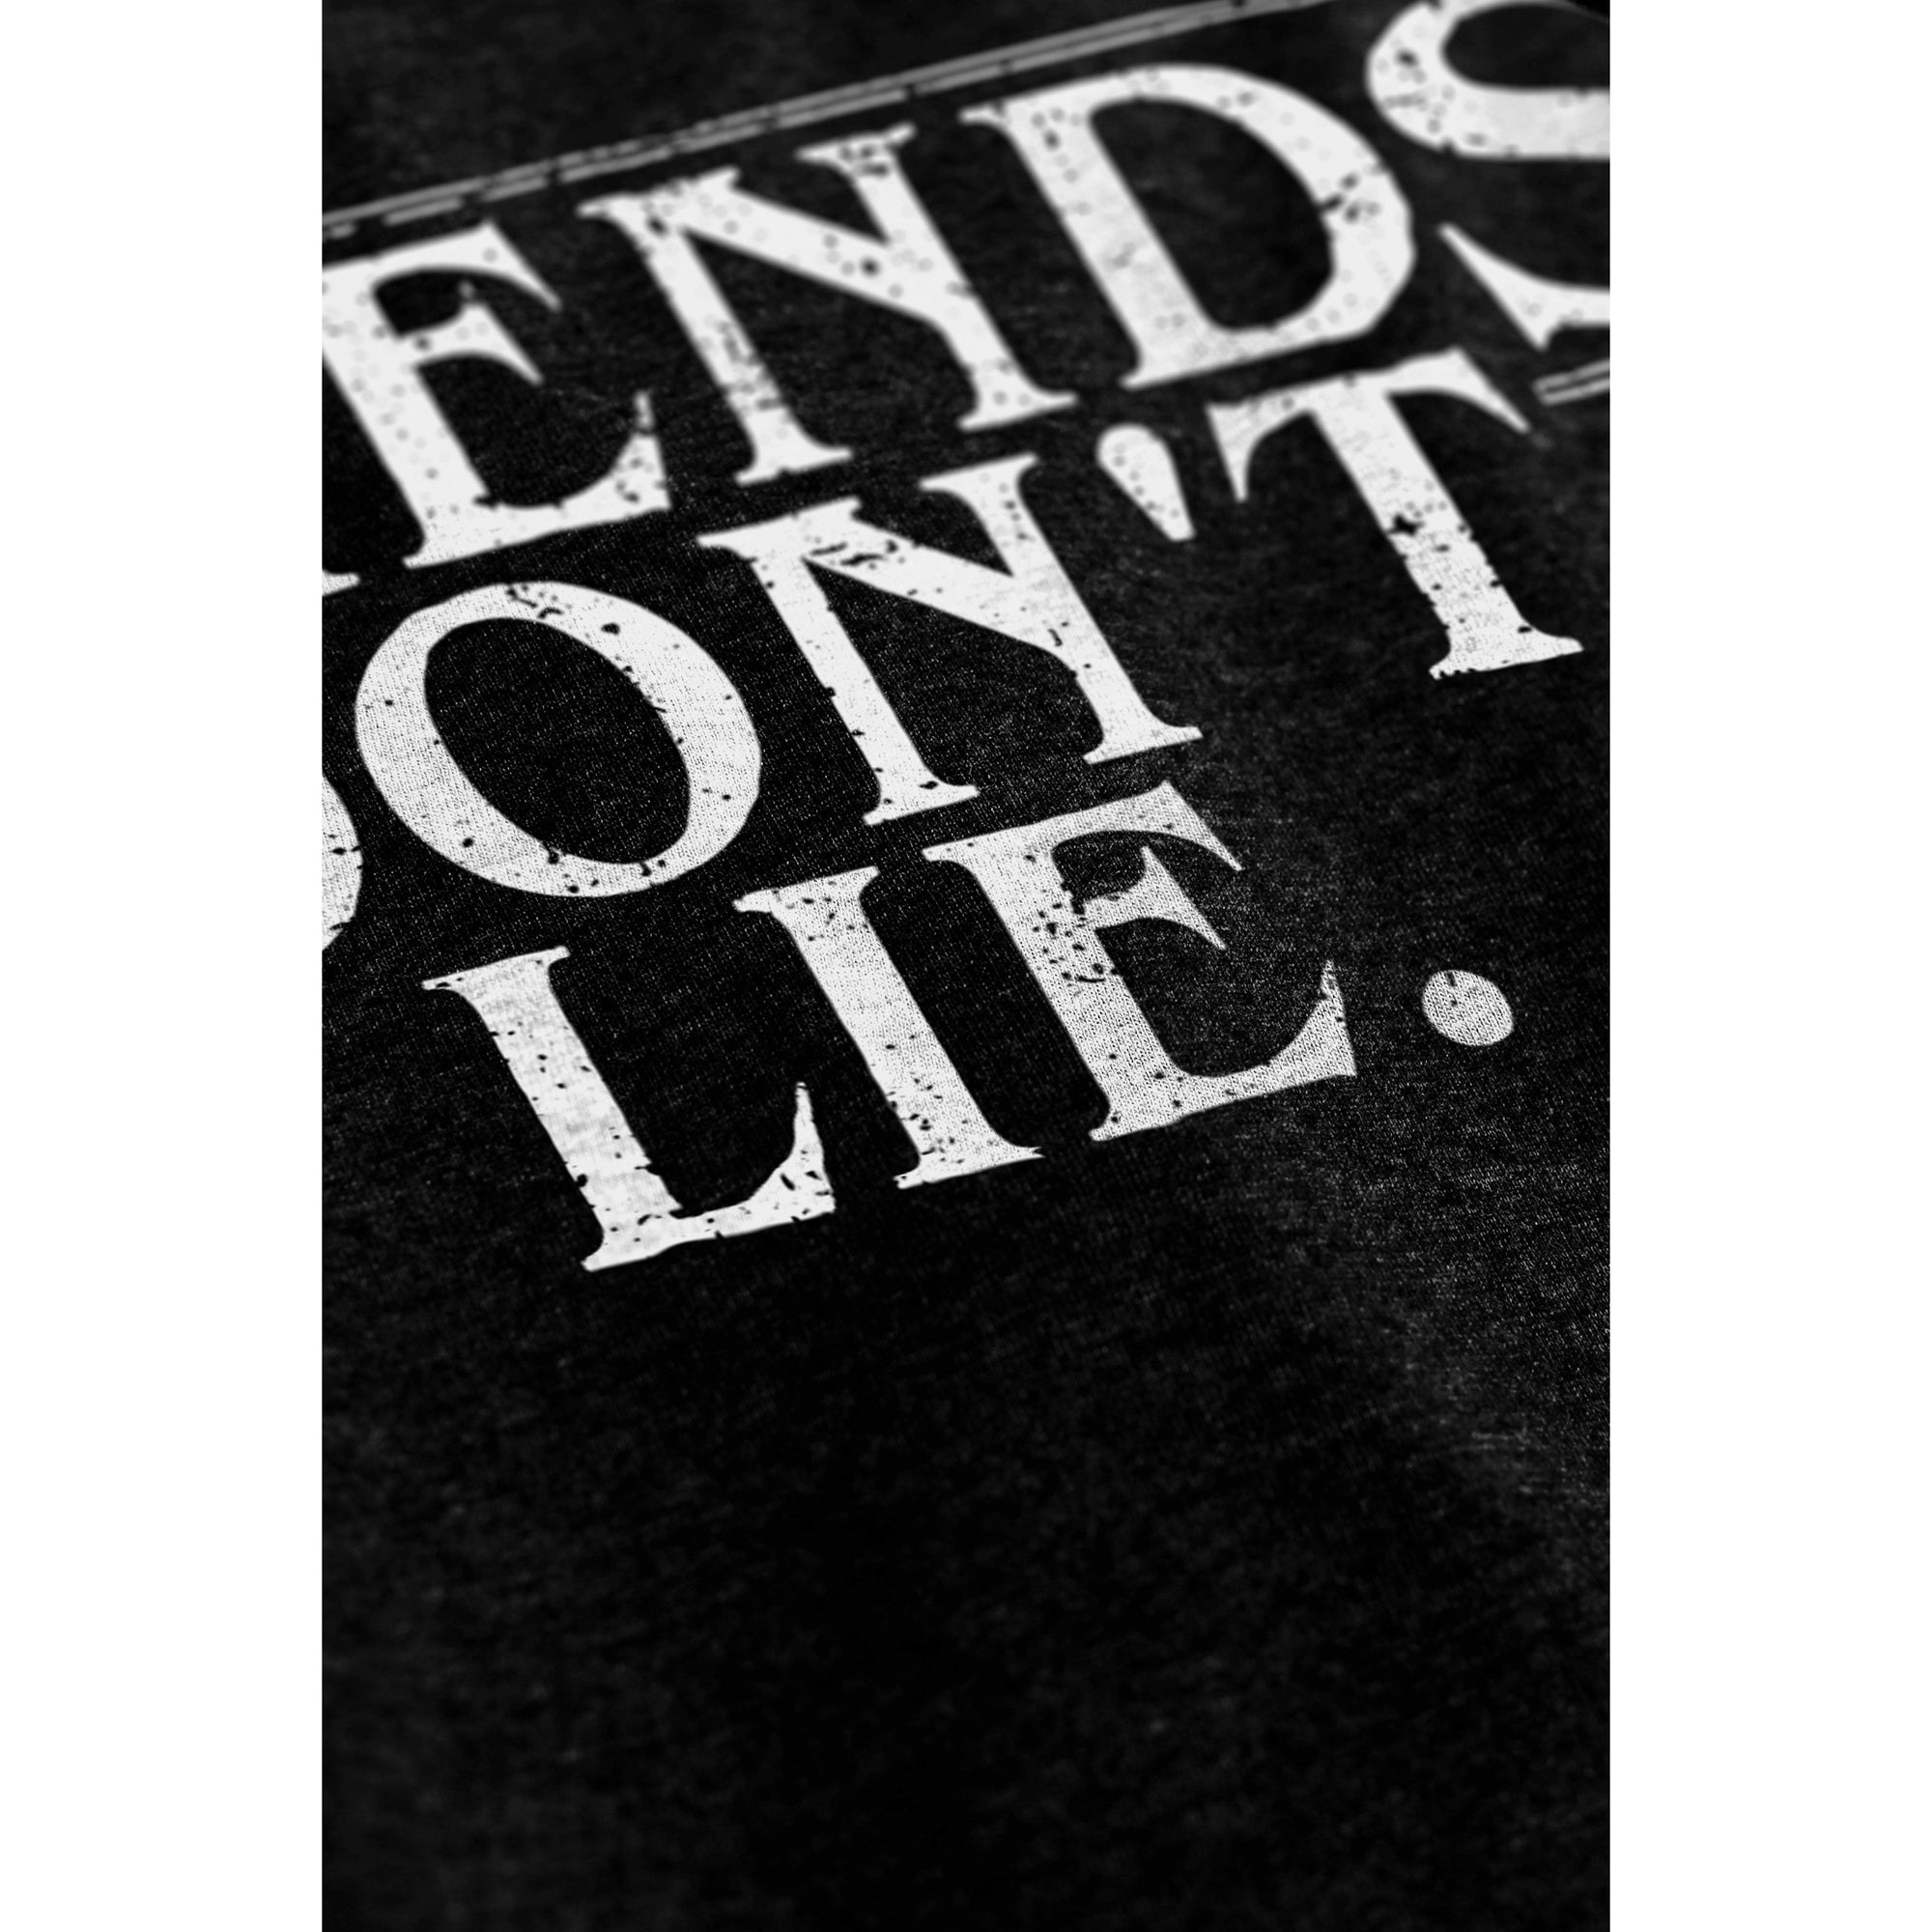 Friends Dont Lie Women's Relaxed Crewneck T-Shirt Top Tee Heather Black Closeup Image